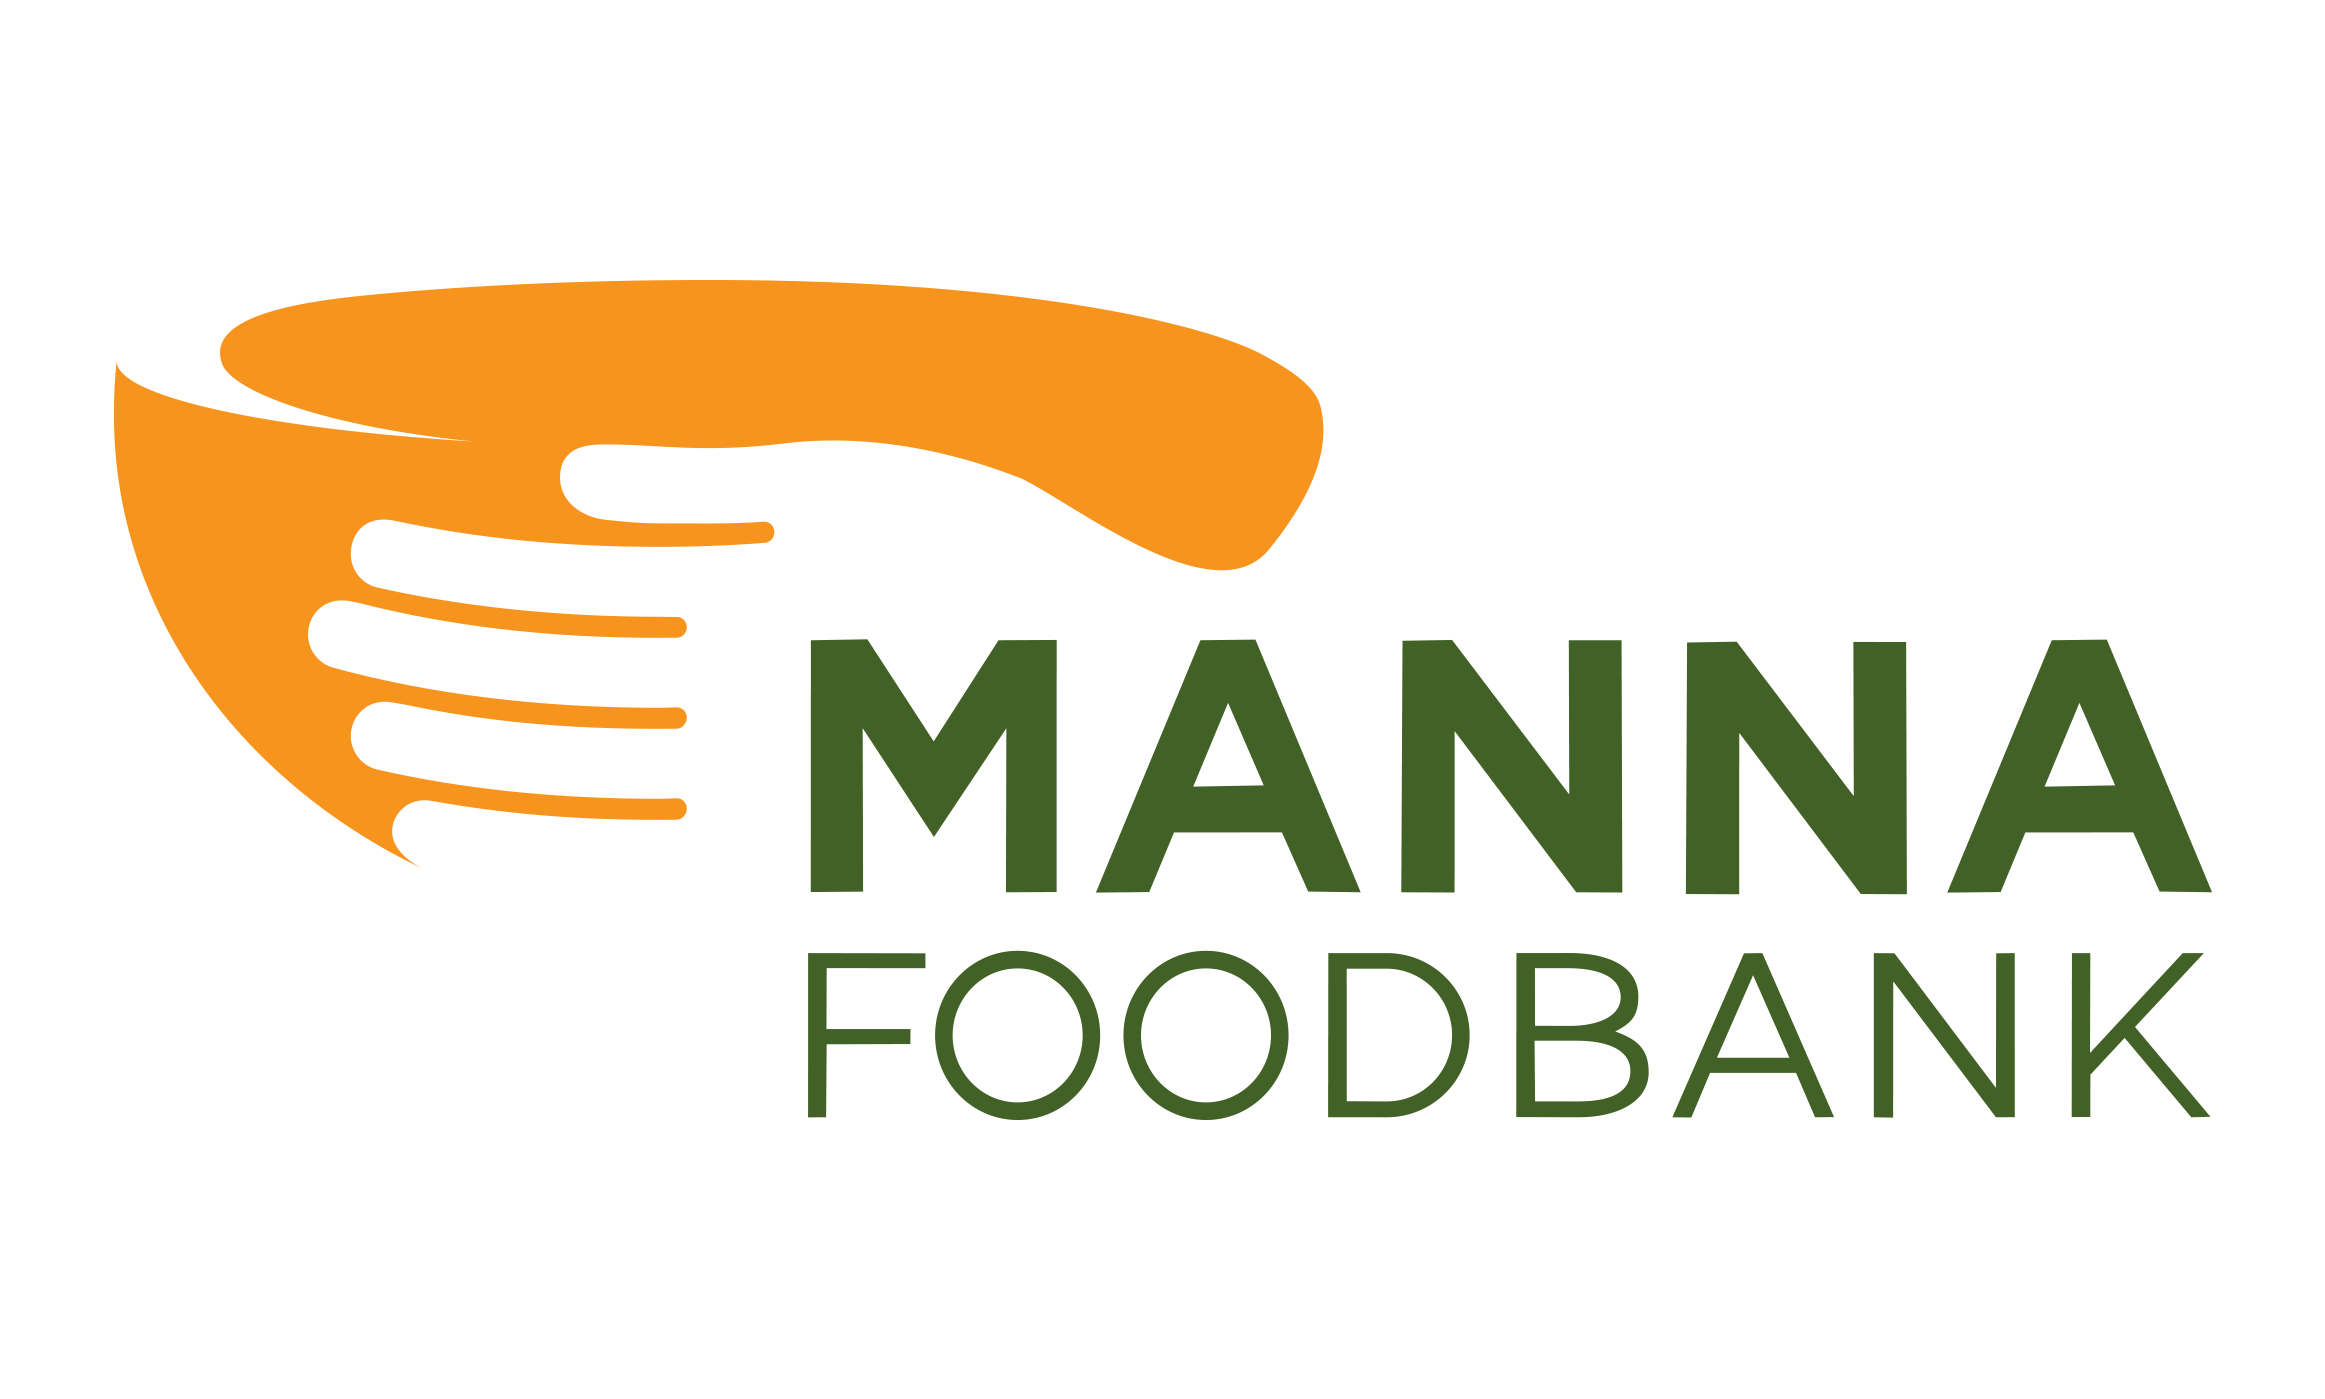 Manna FoodBank Empty Bowls